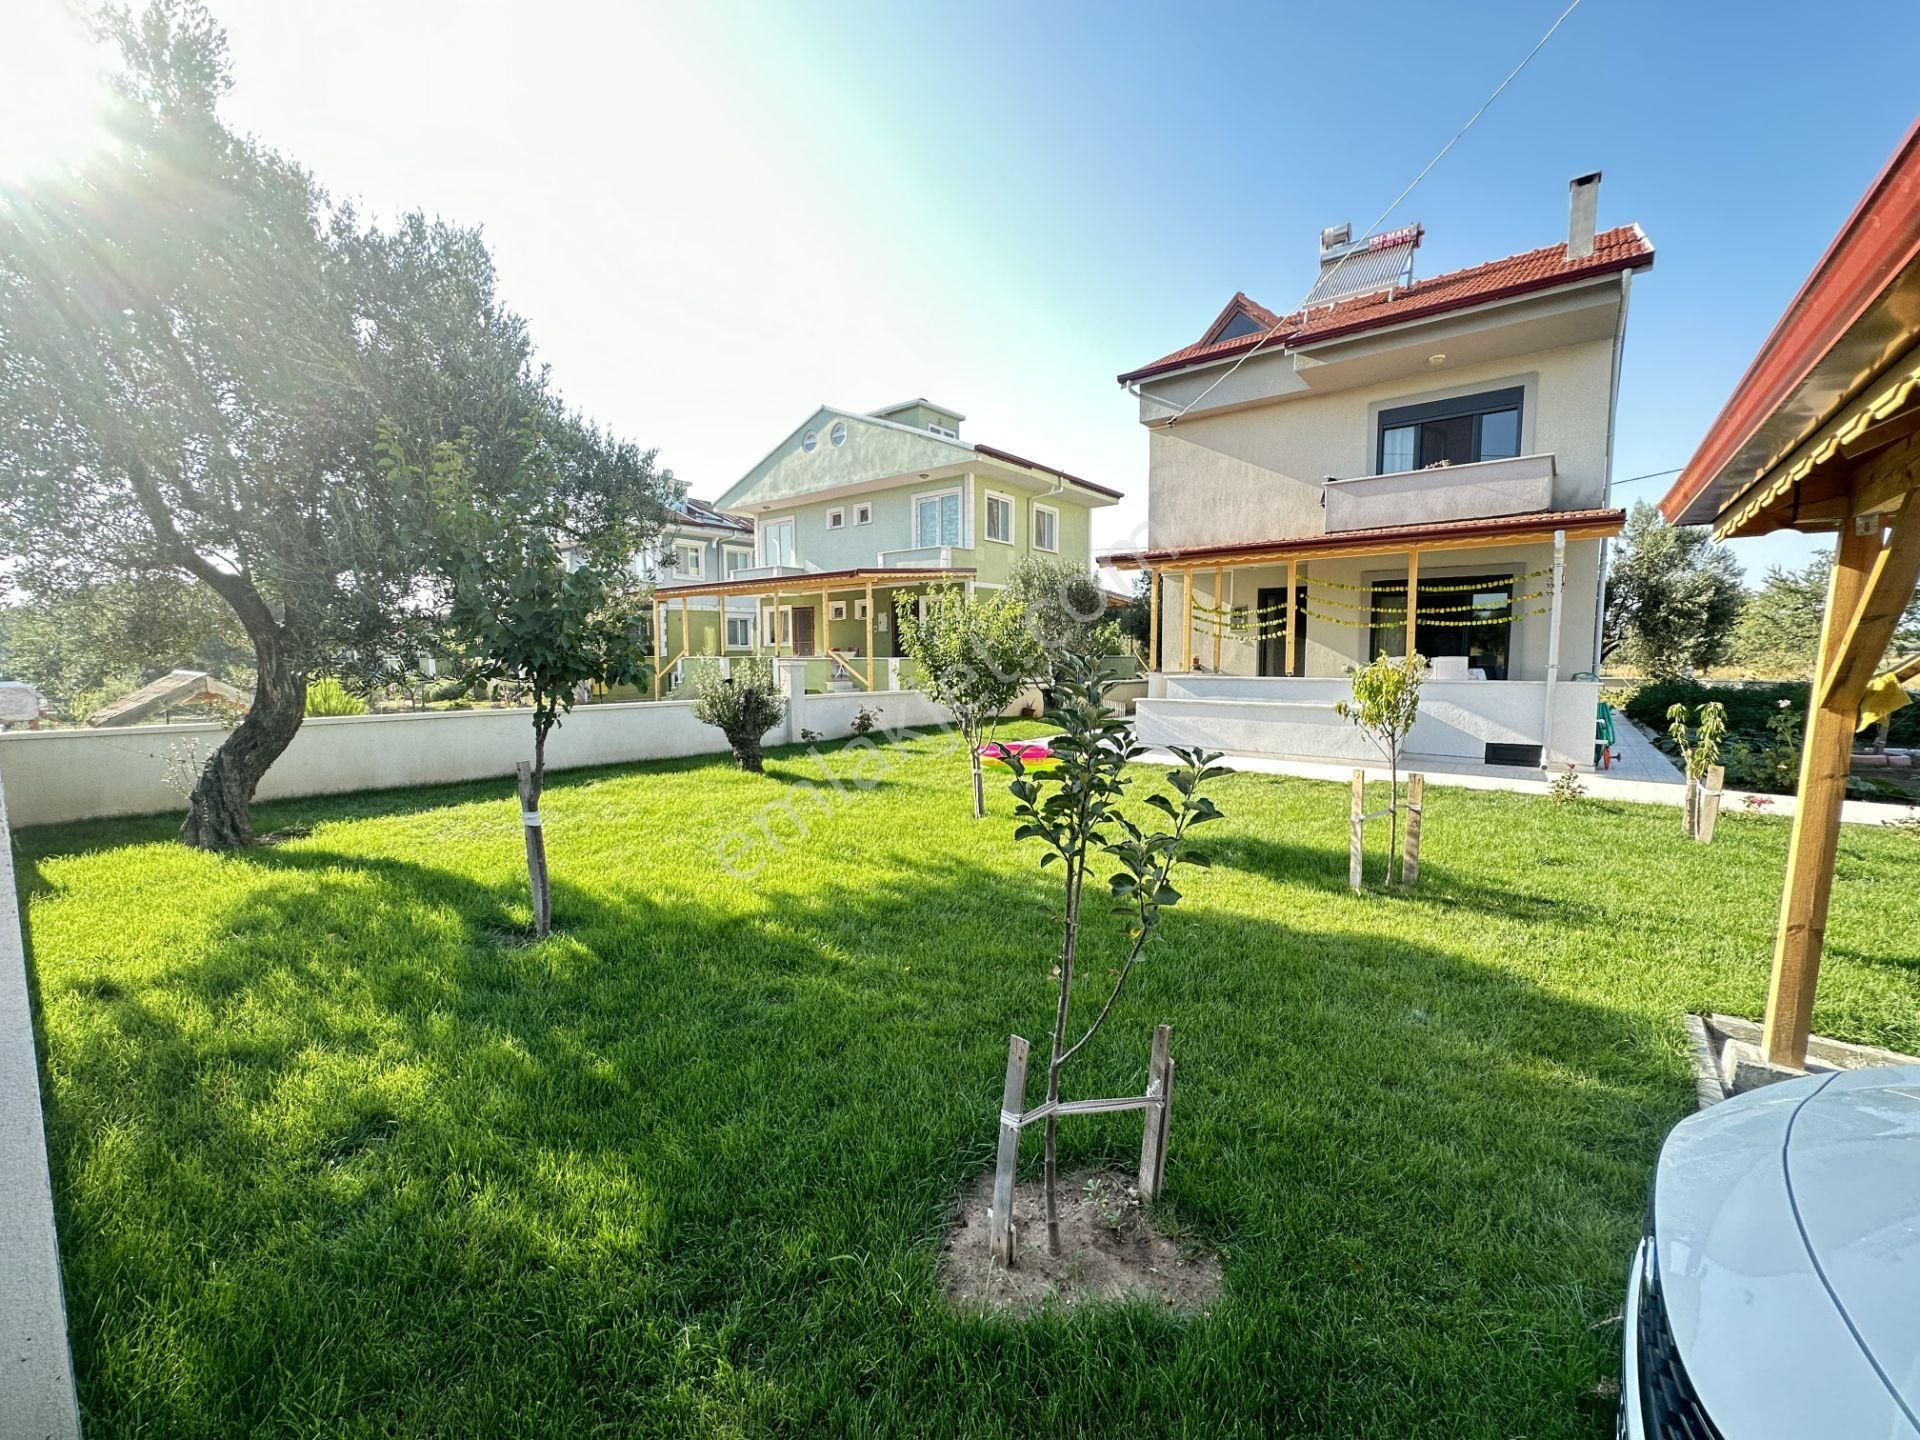 Ezine Geyikli Bld. (Cumhuriyet) Satılık Villa  Çanakkale Geyikli'de Satılık Villa